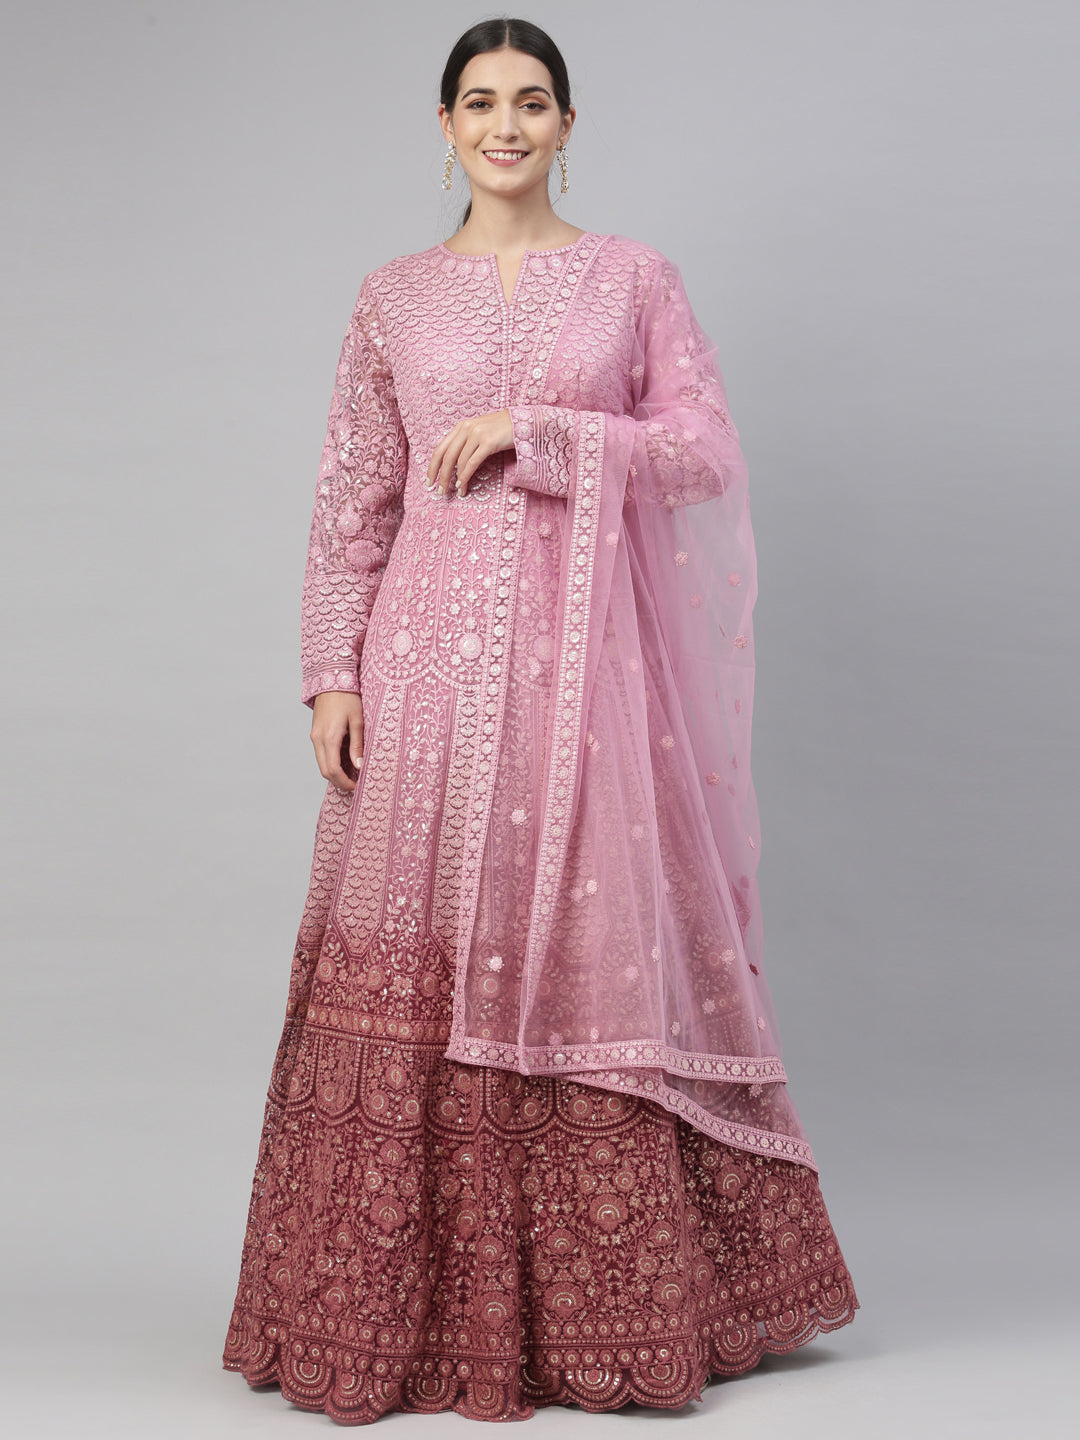 Neeru's Pink Color Nett Fabric Gown